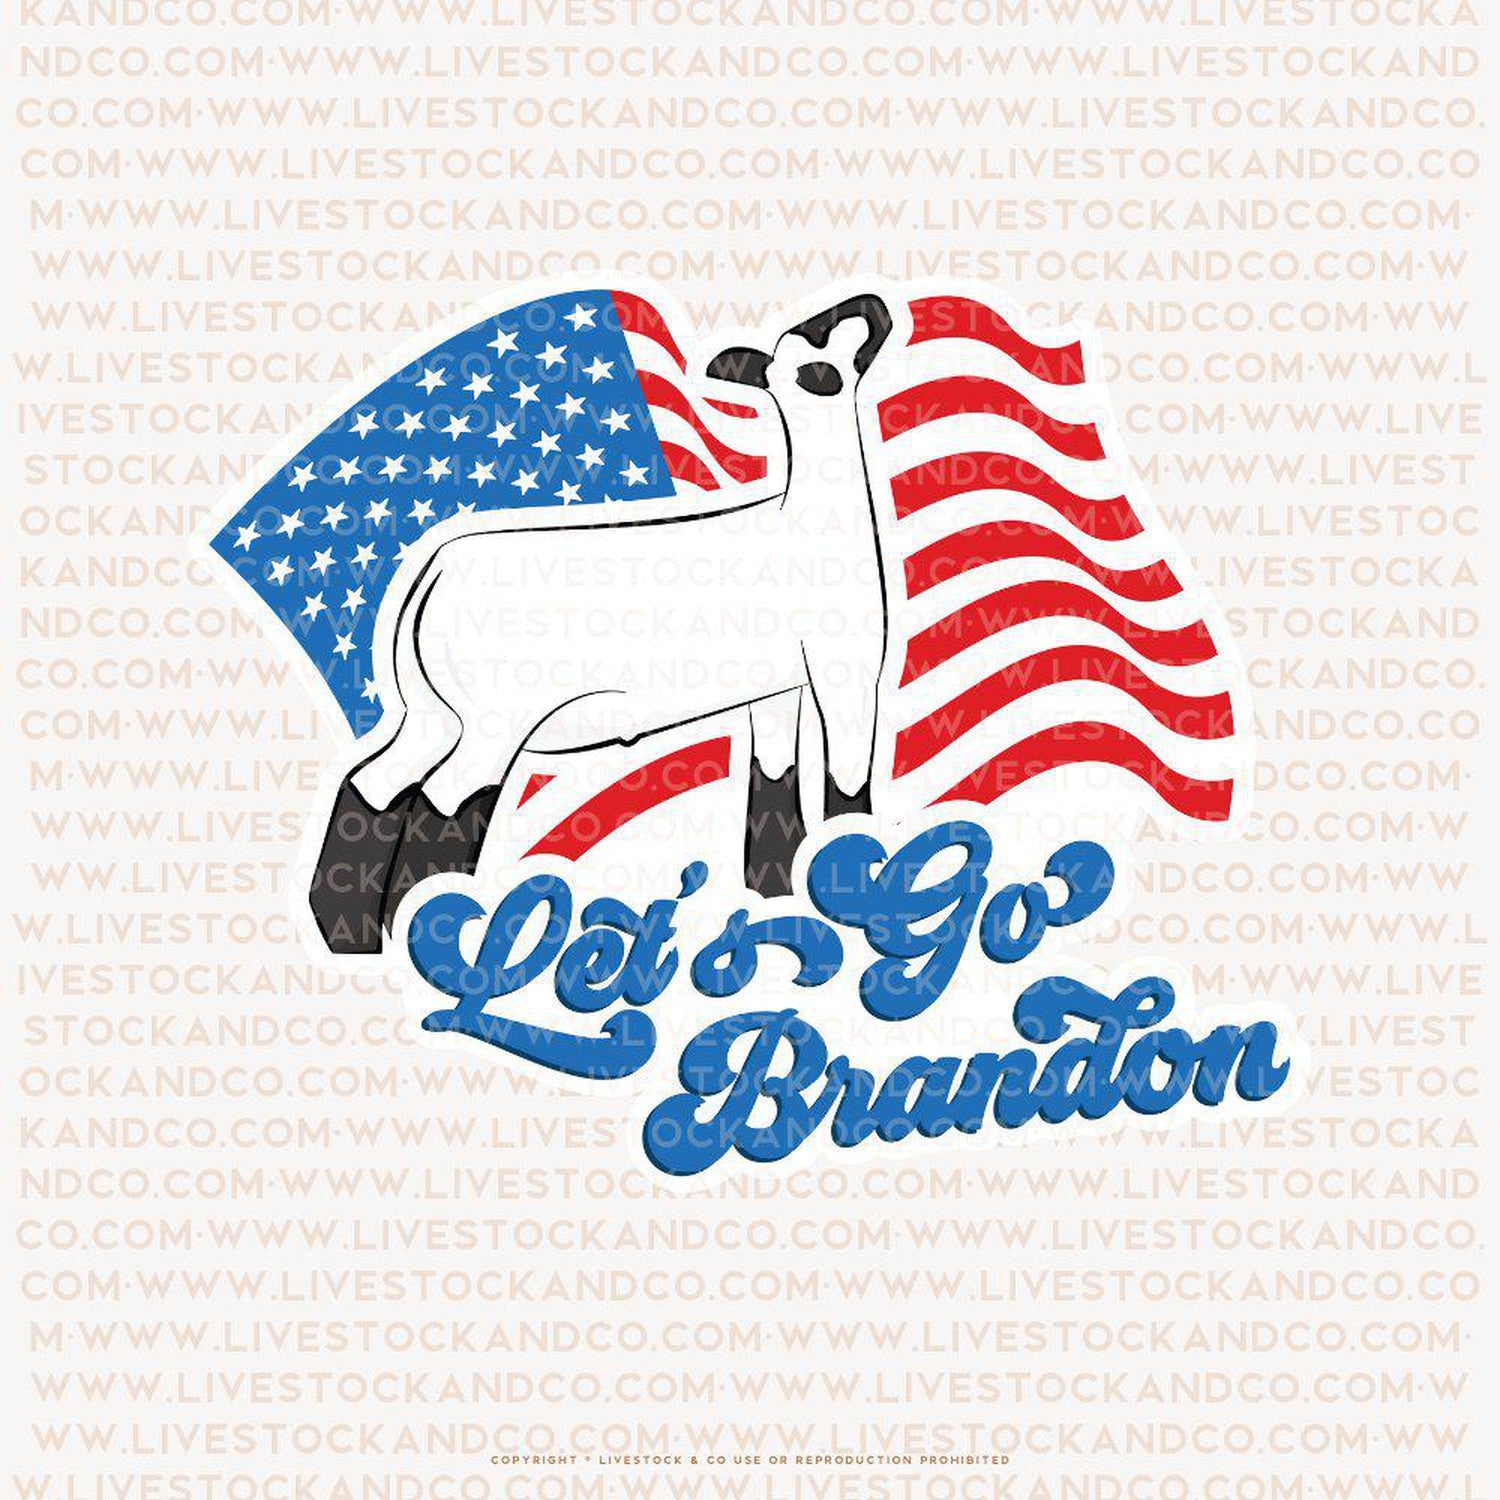 Custom Made Let's Go Brandon Livestock Stickers Stock Show Livestock - Livestock &amp; Co. Boutique